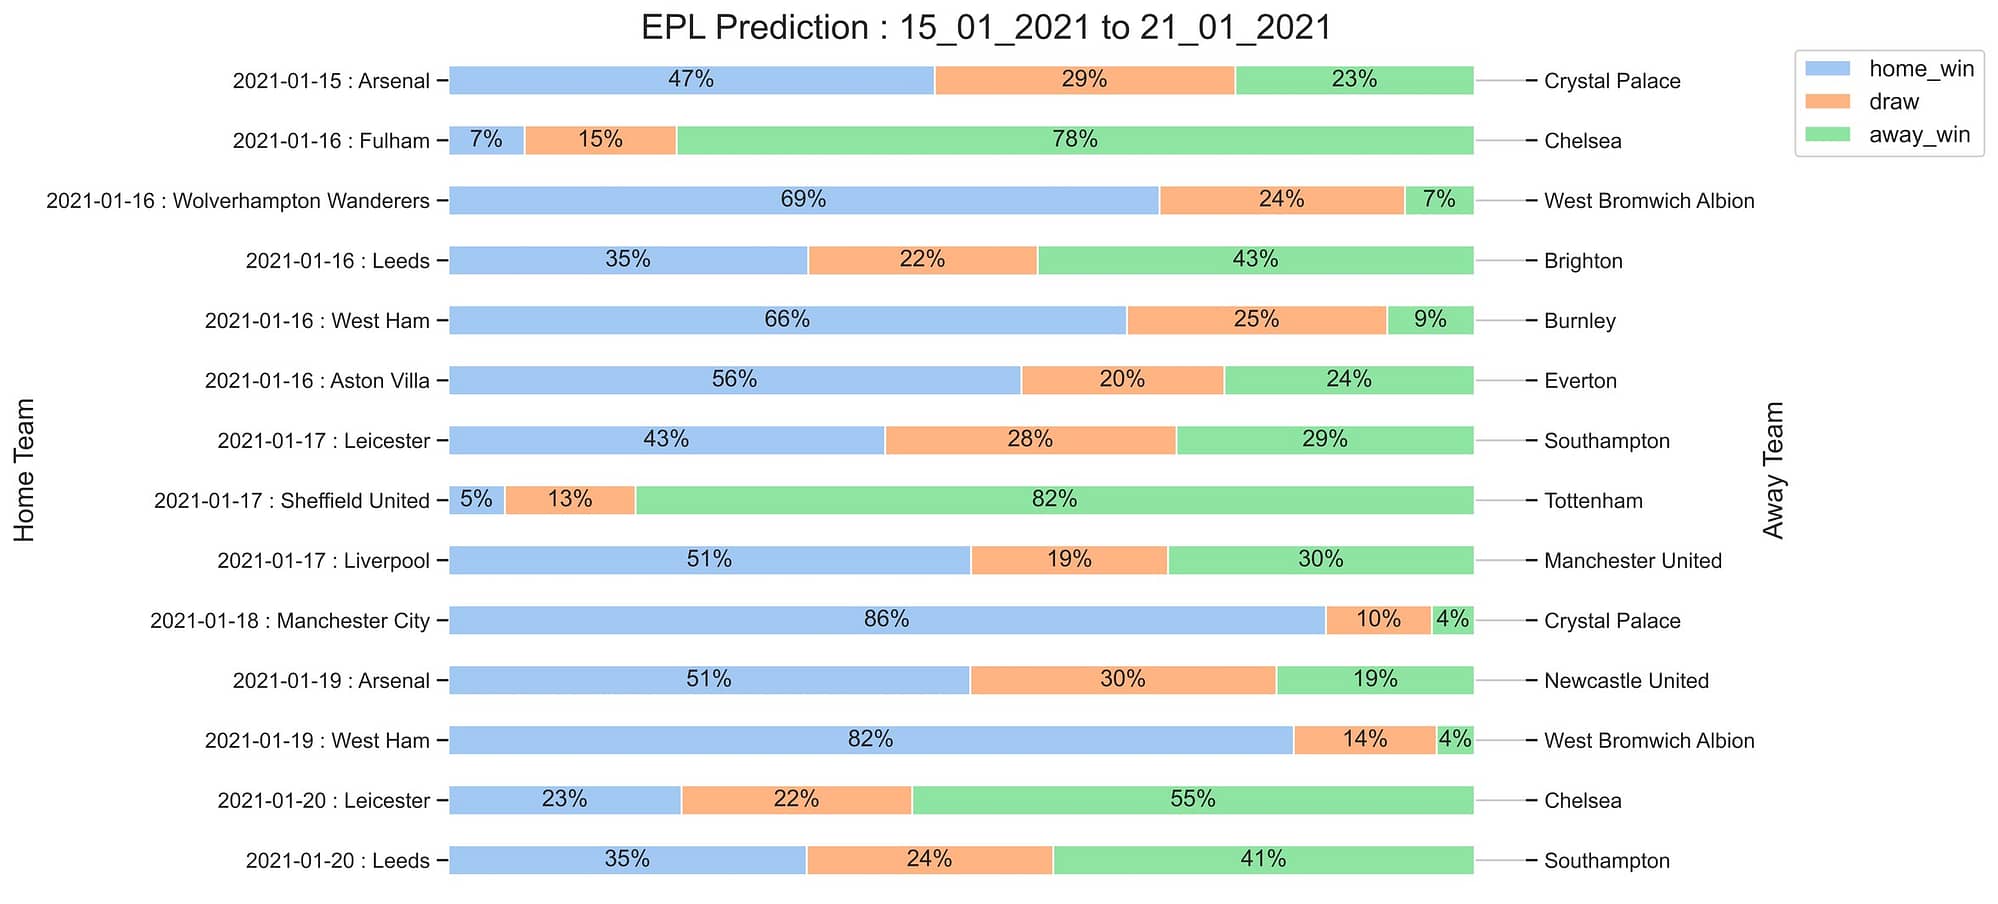 EPL_Prediction 15_01_2021